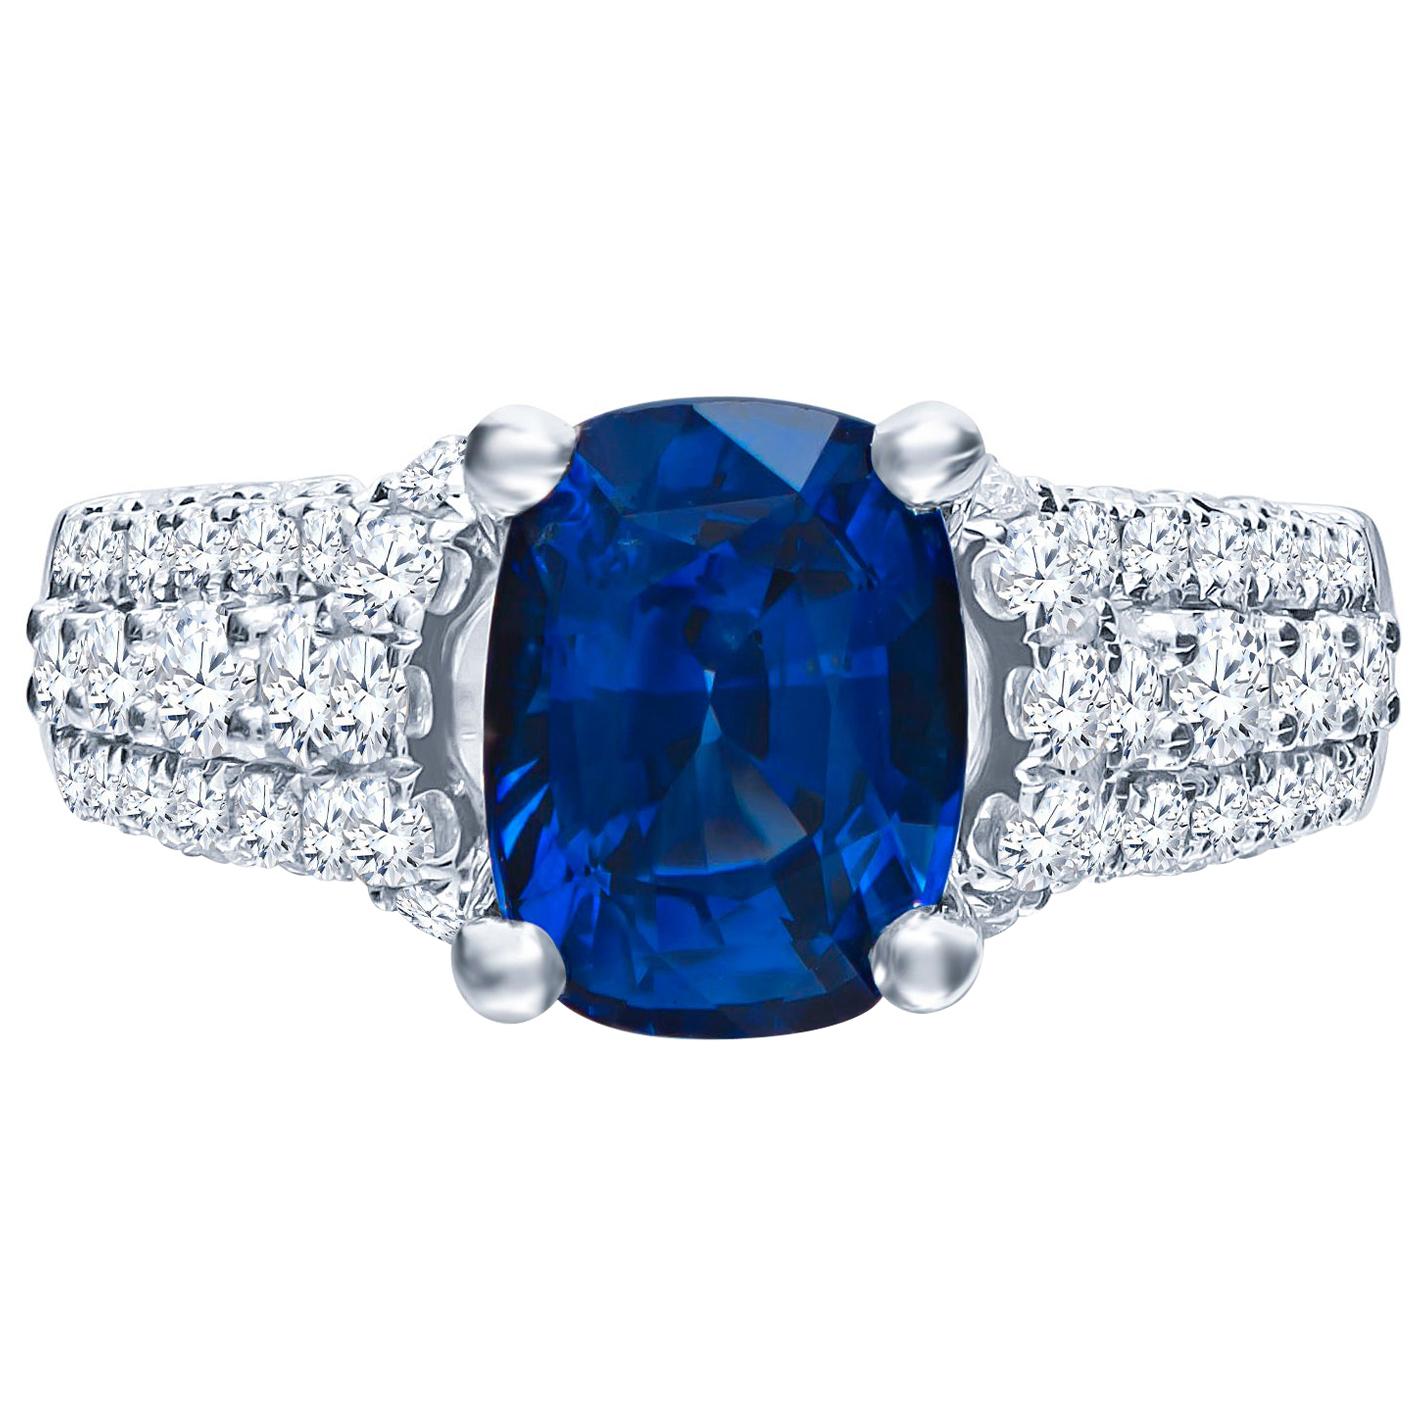 2.77 Carat Natural Blue Cushion Cut 'GIA' Sapphire and Diamond Ring, 18 Karat